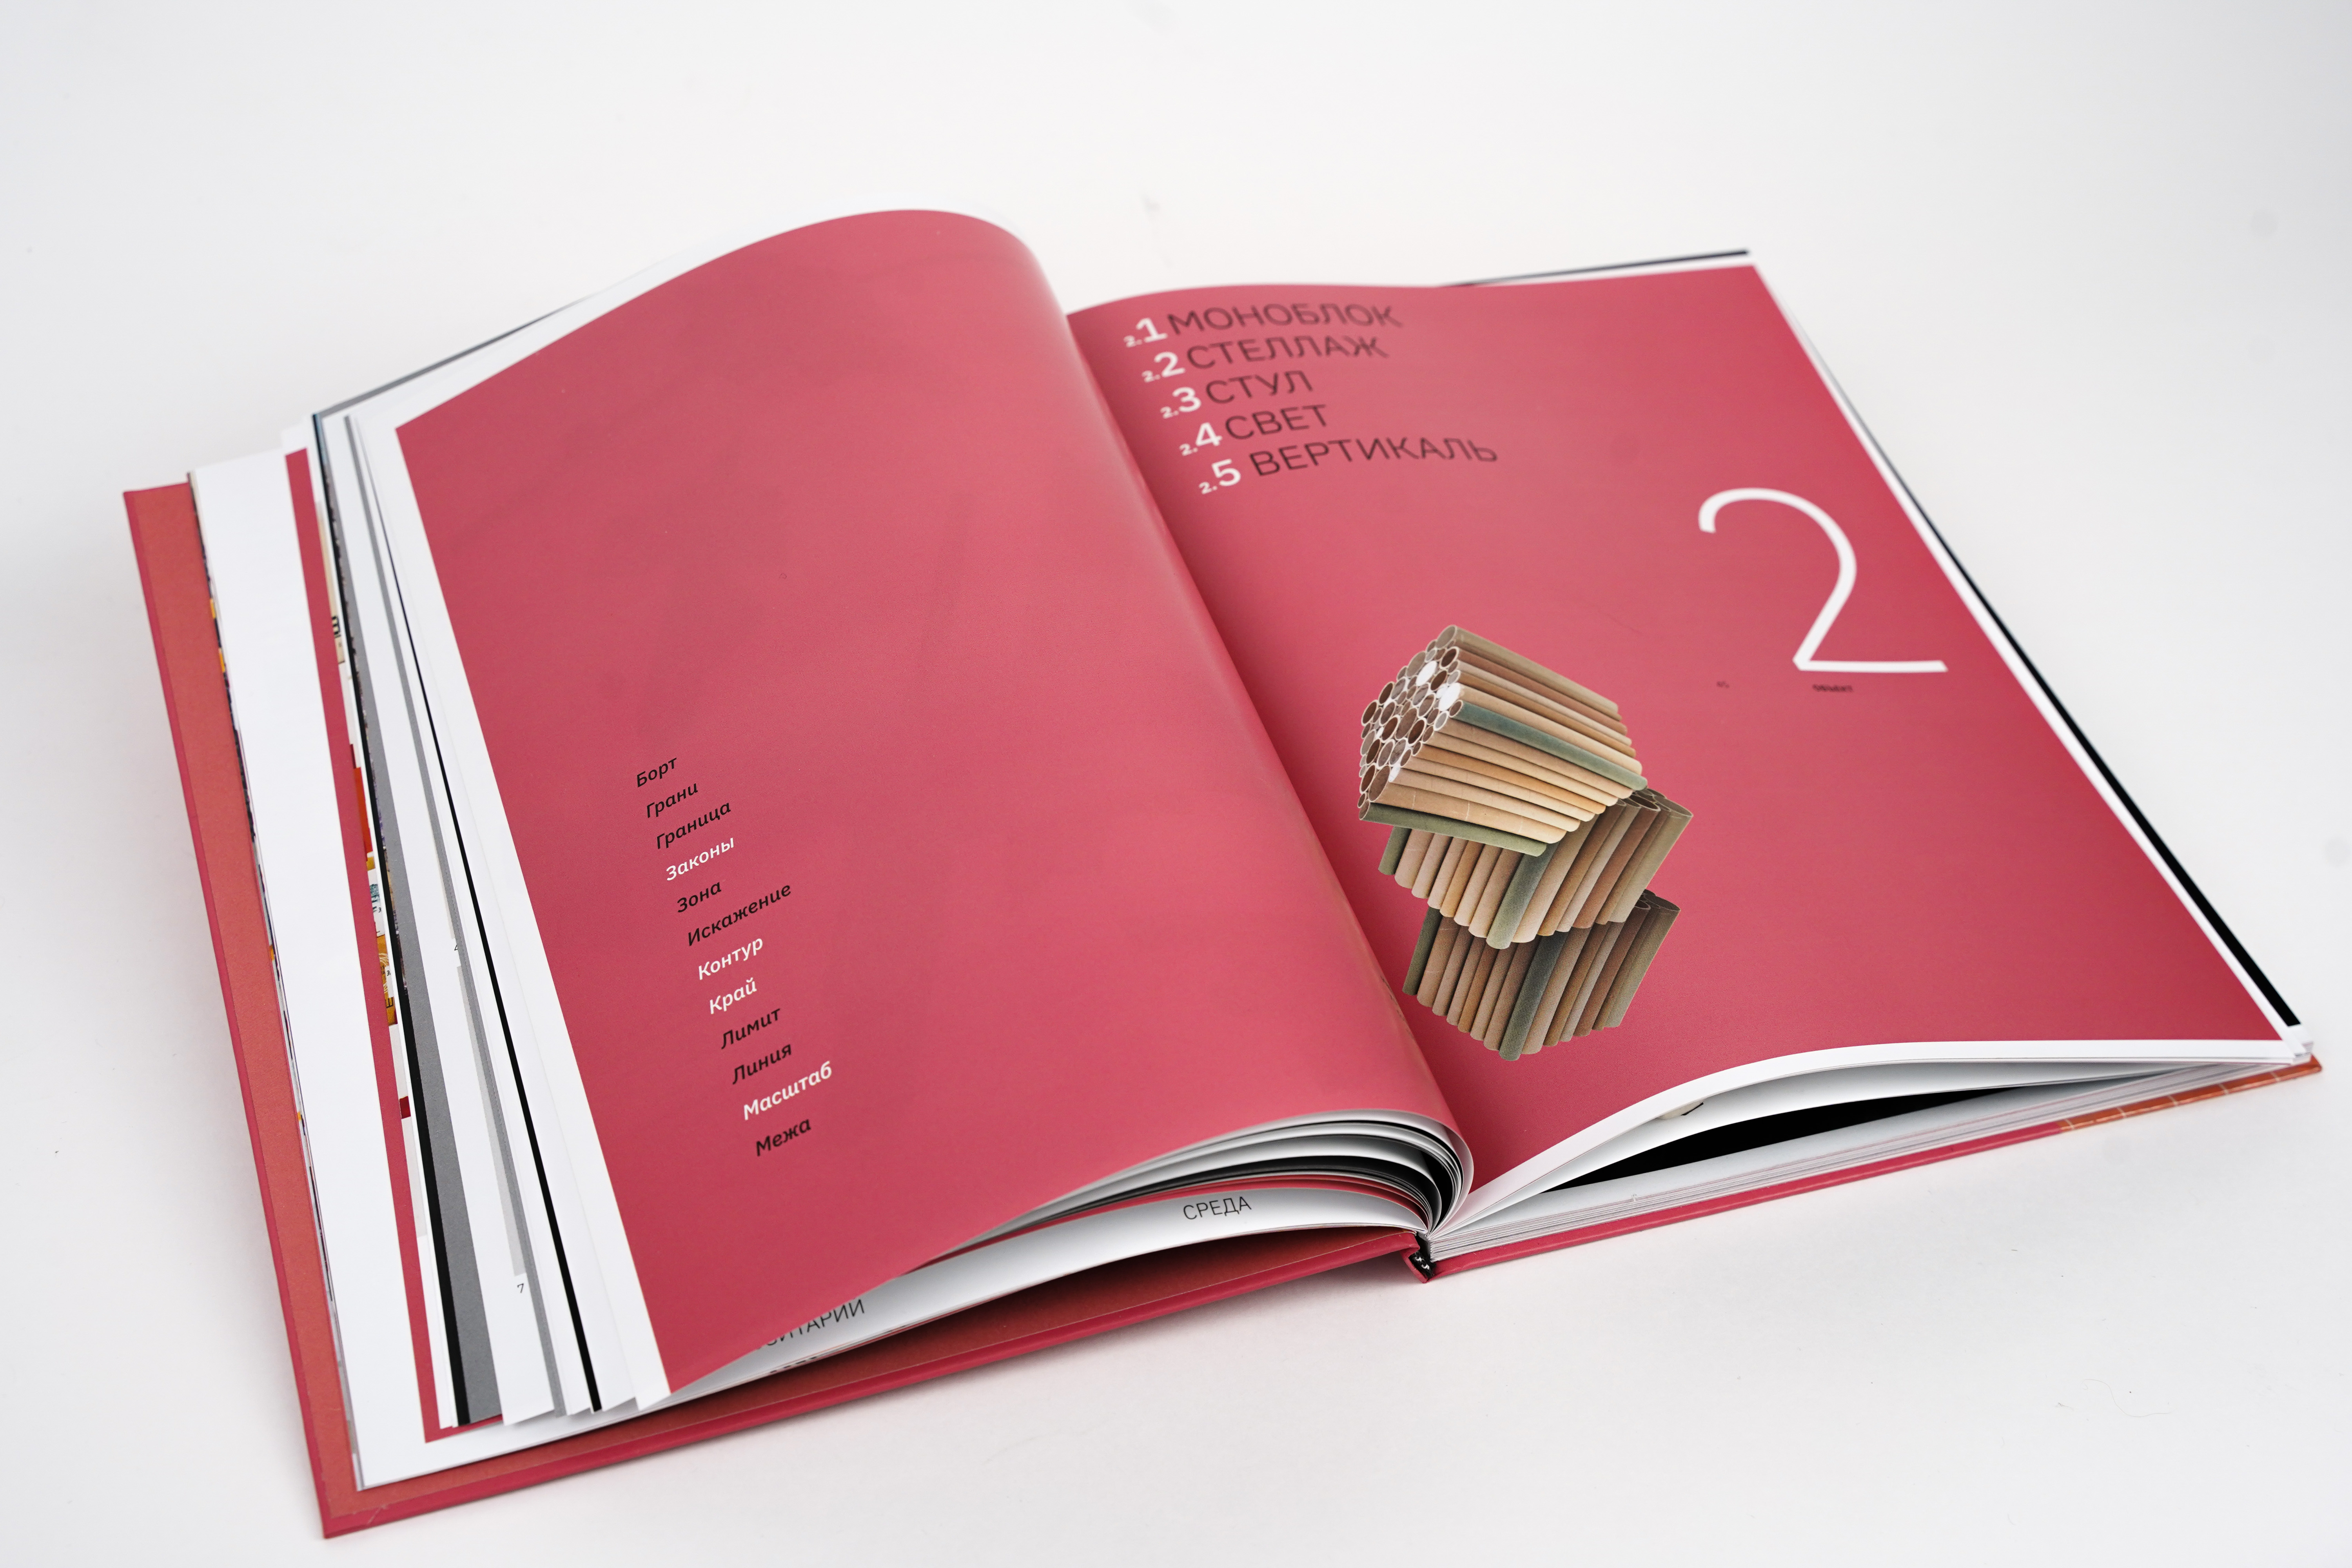 Книга про архитектуру и дизайн от B&D увидит свет уже 1 ноября